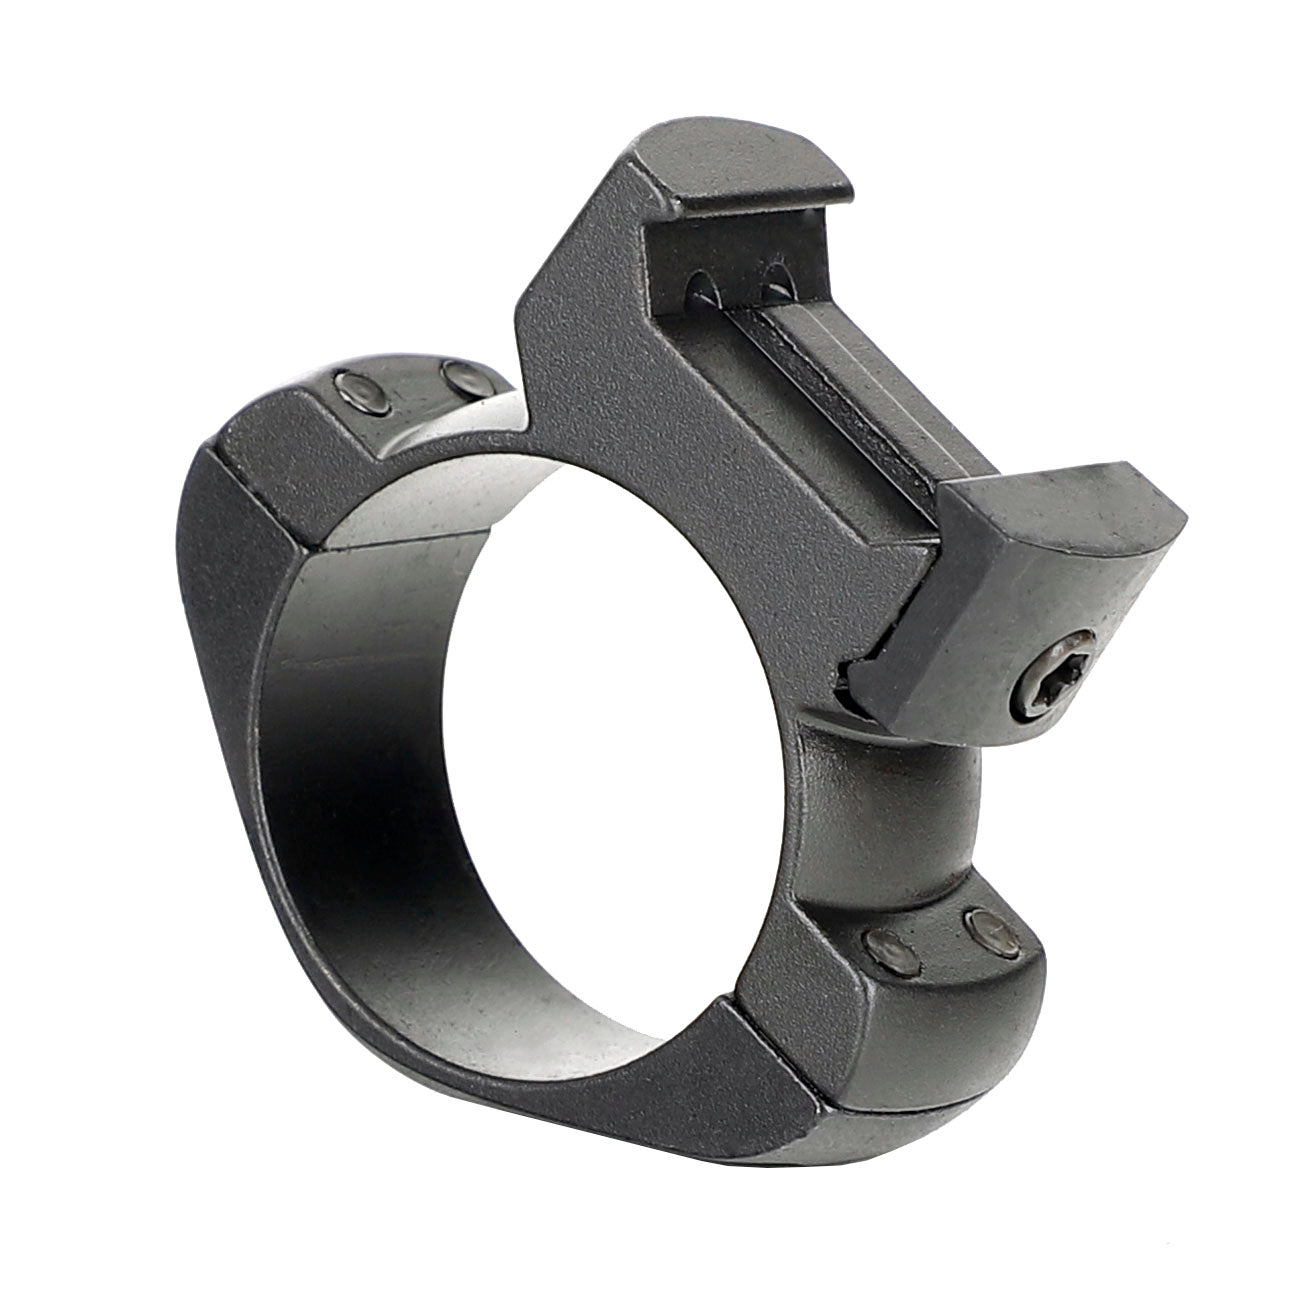 ohhunt® 30mm Picatinny Scope Rings Mount Steel Medium Profile 2PCs